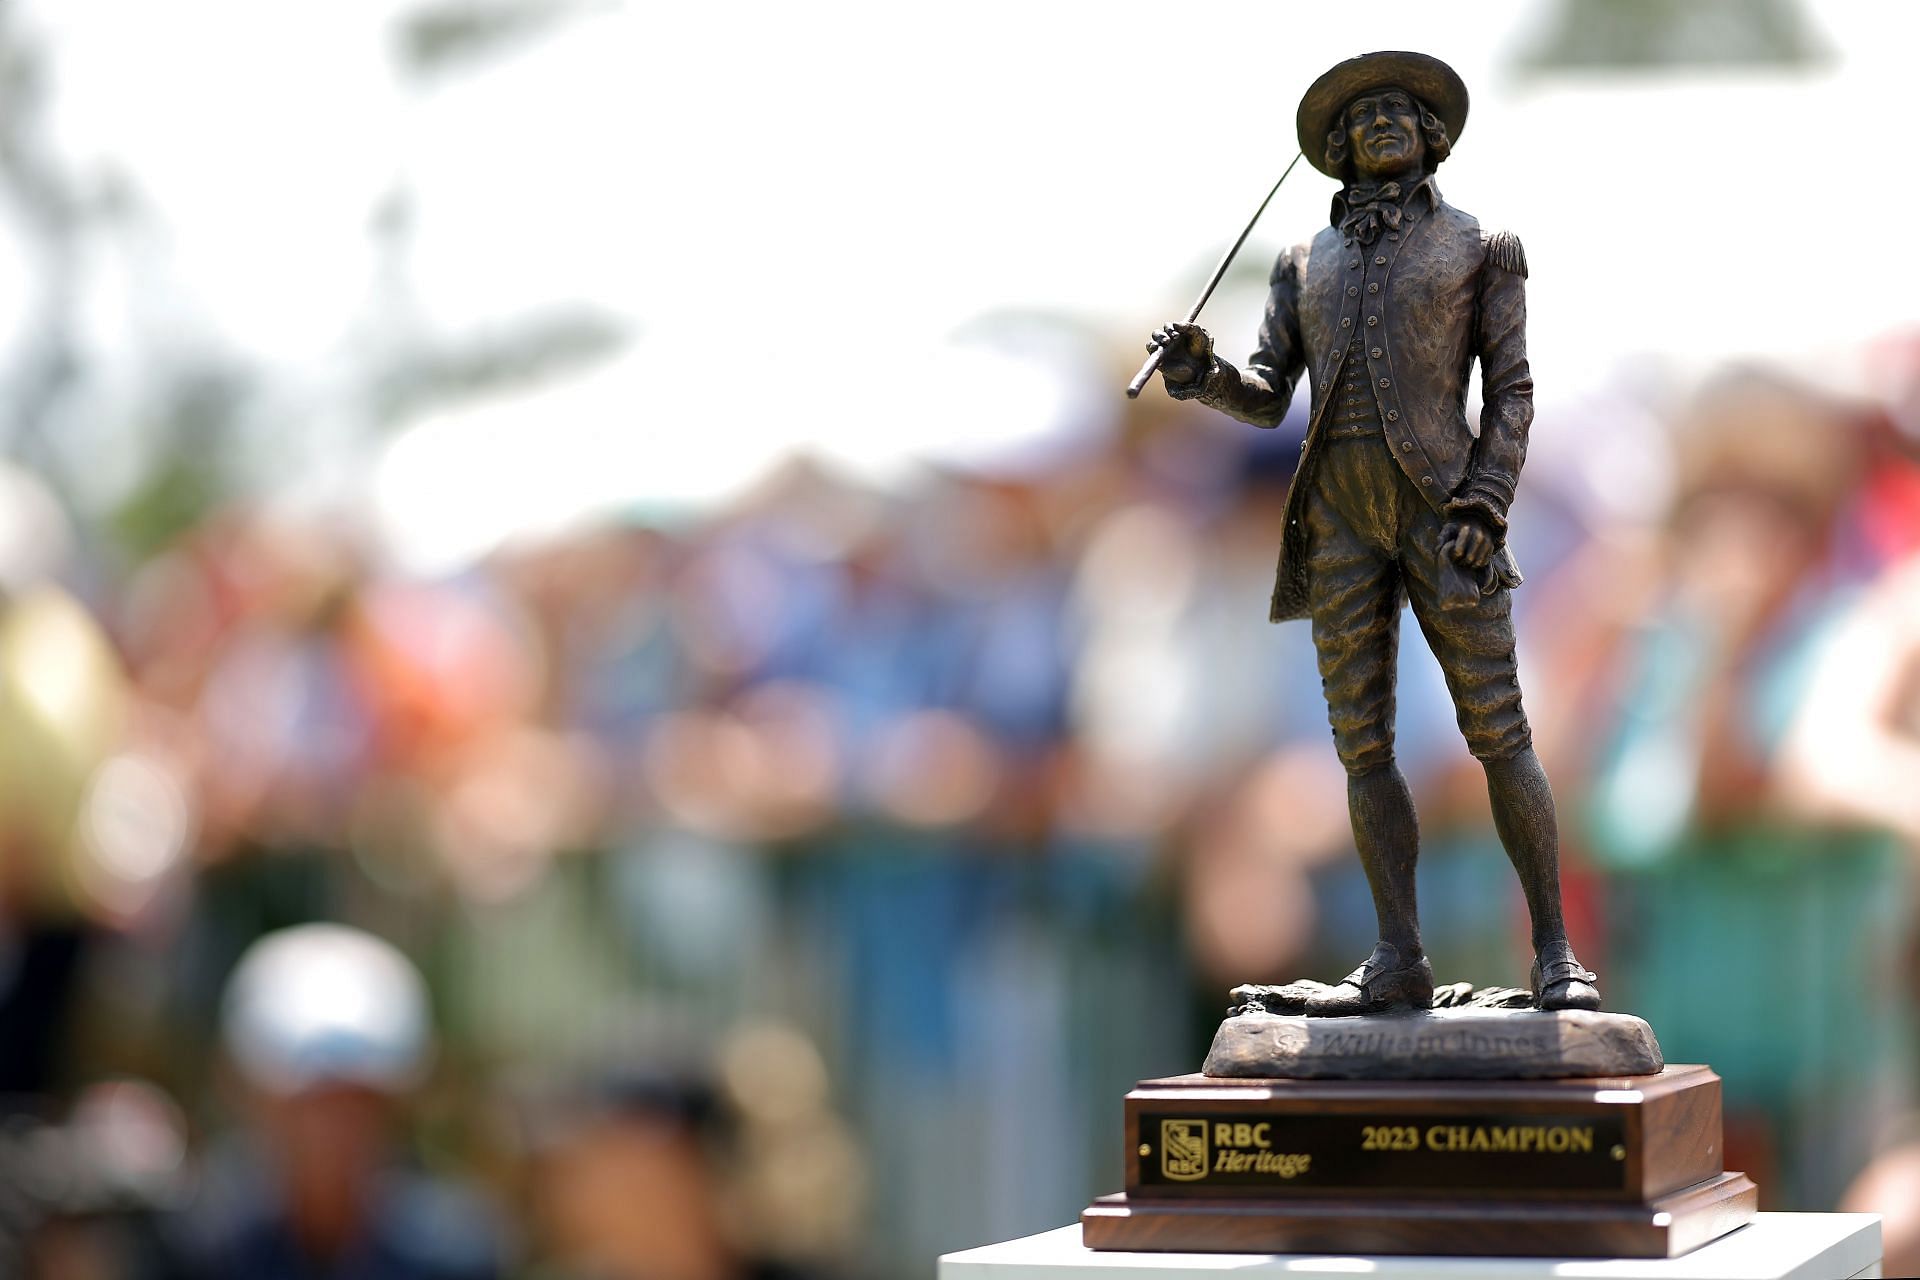 RBC Heritage trophy (Image via Getty)